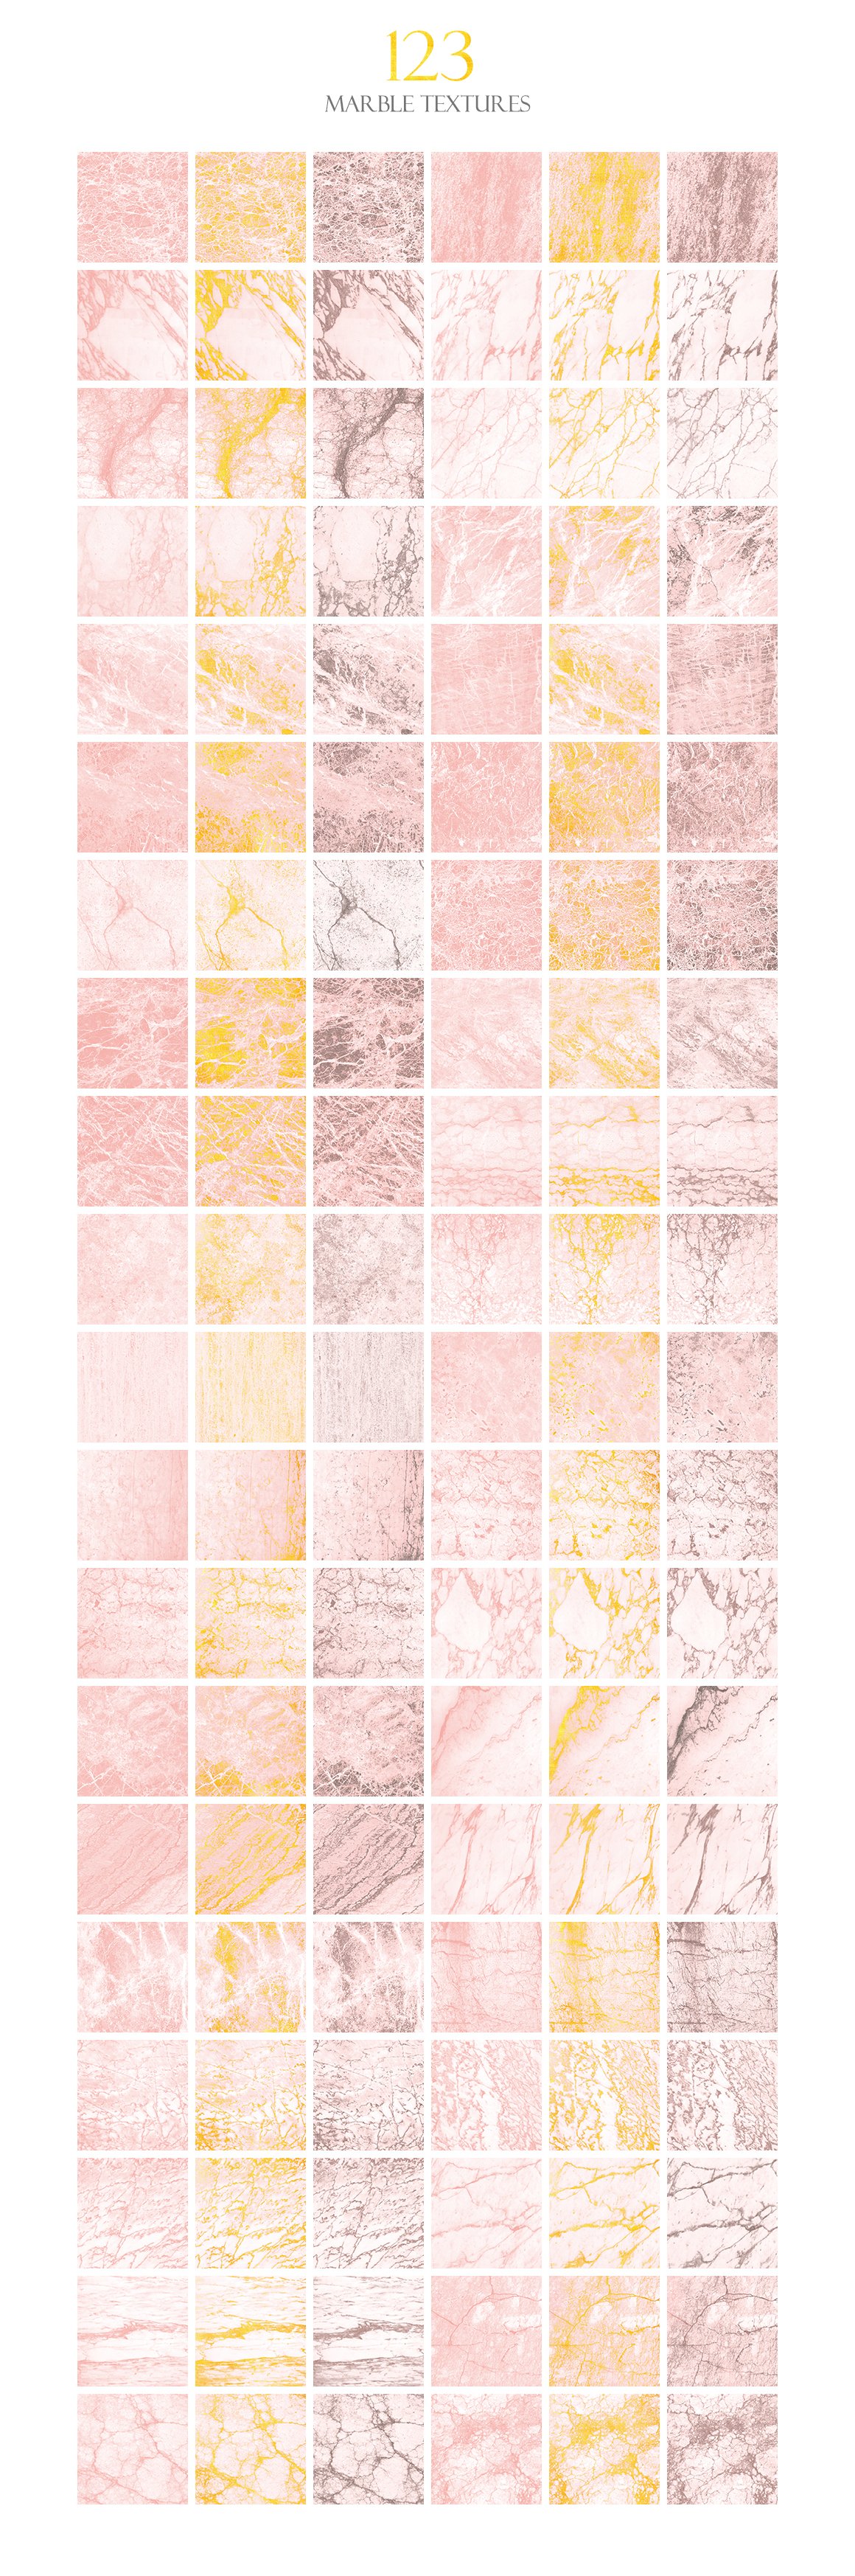 369 Marble Textures-6.jpg